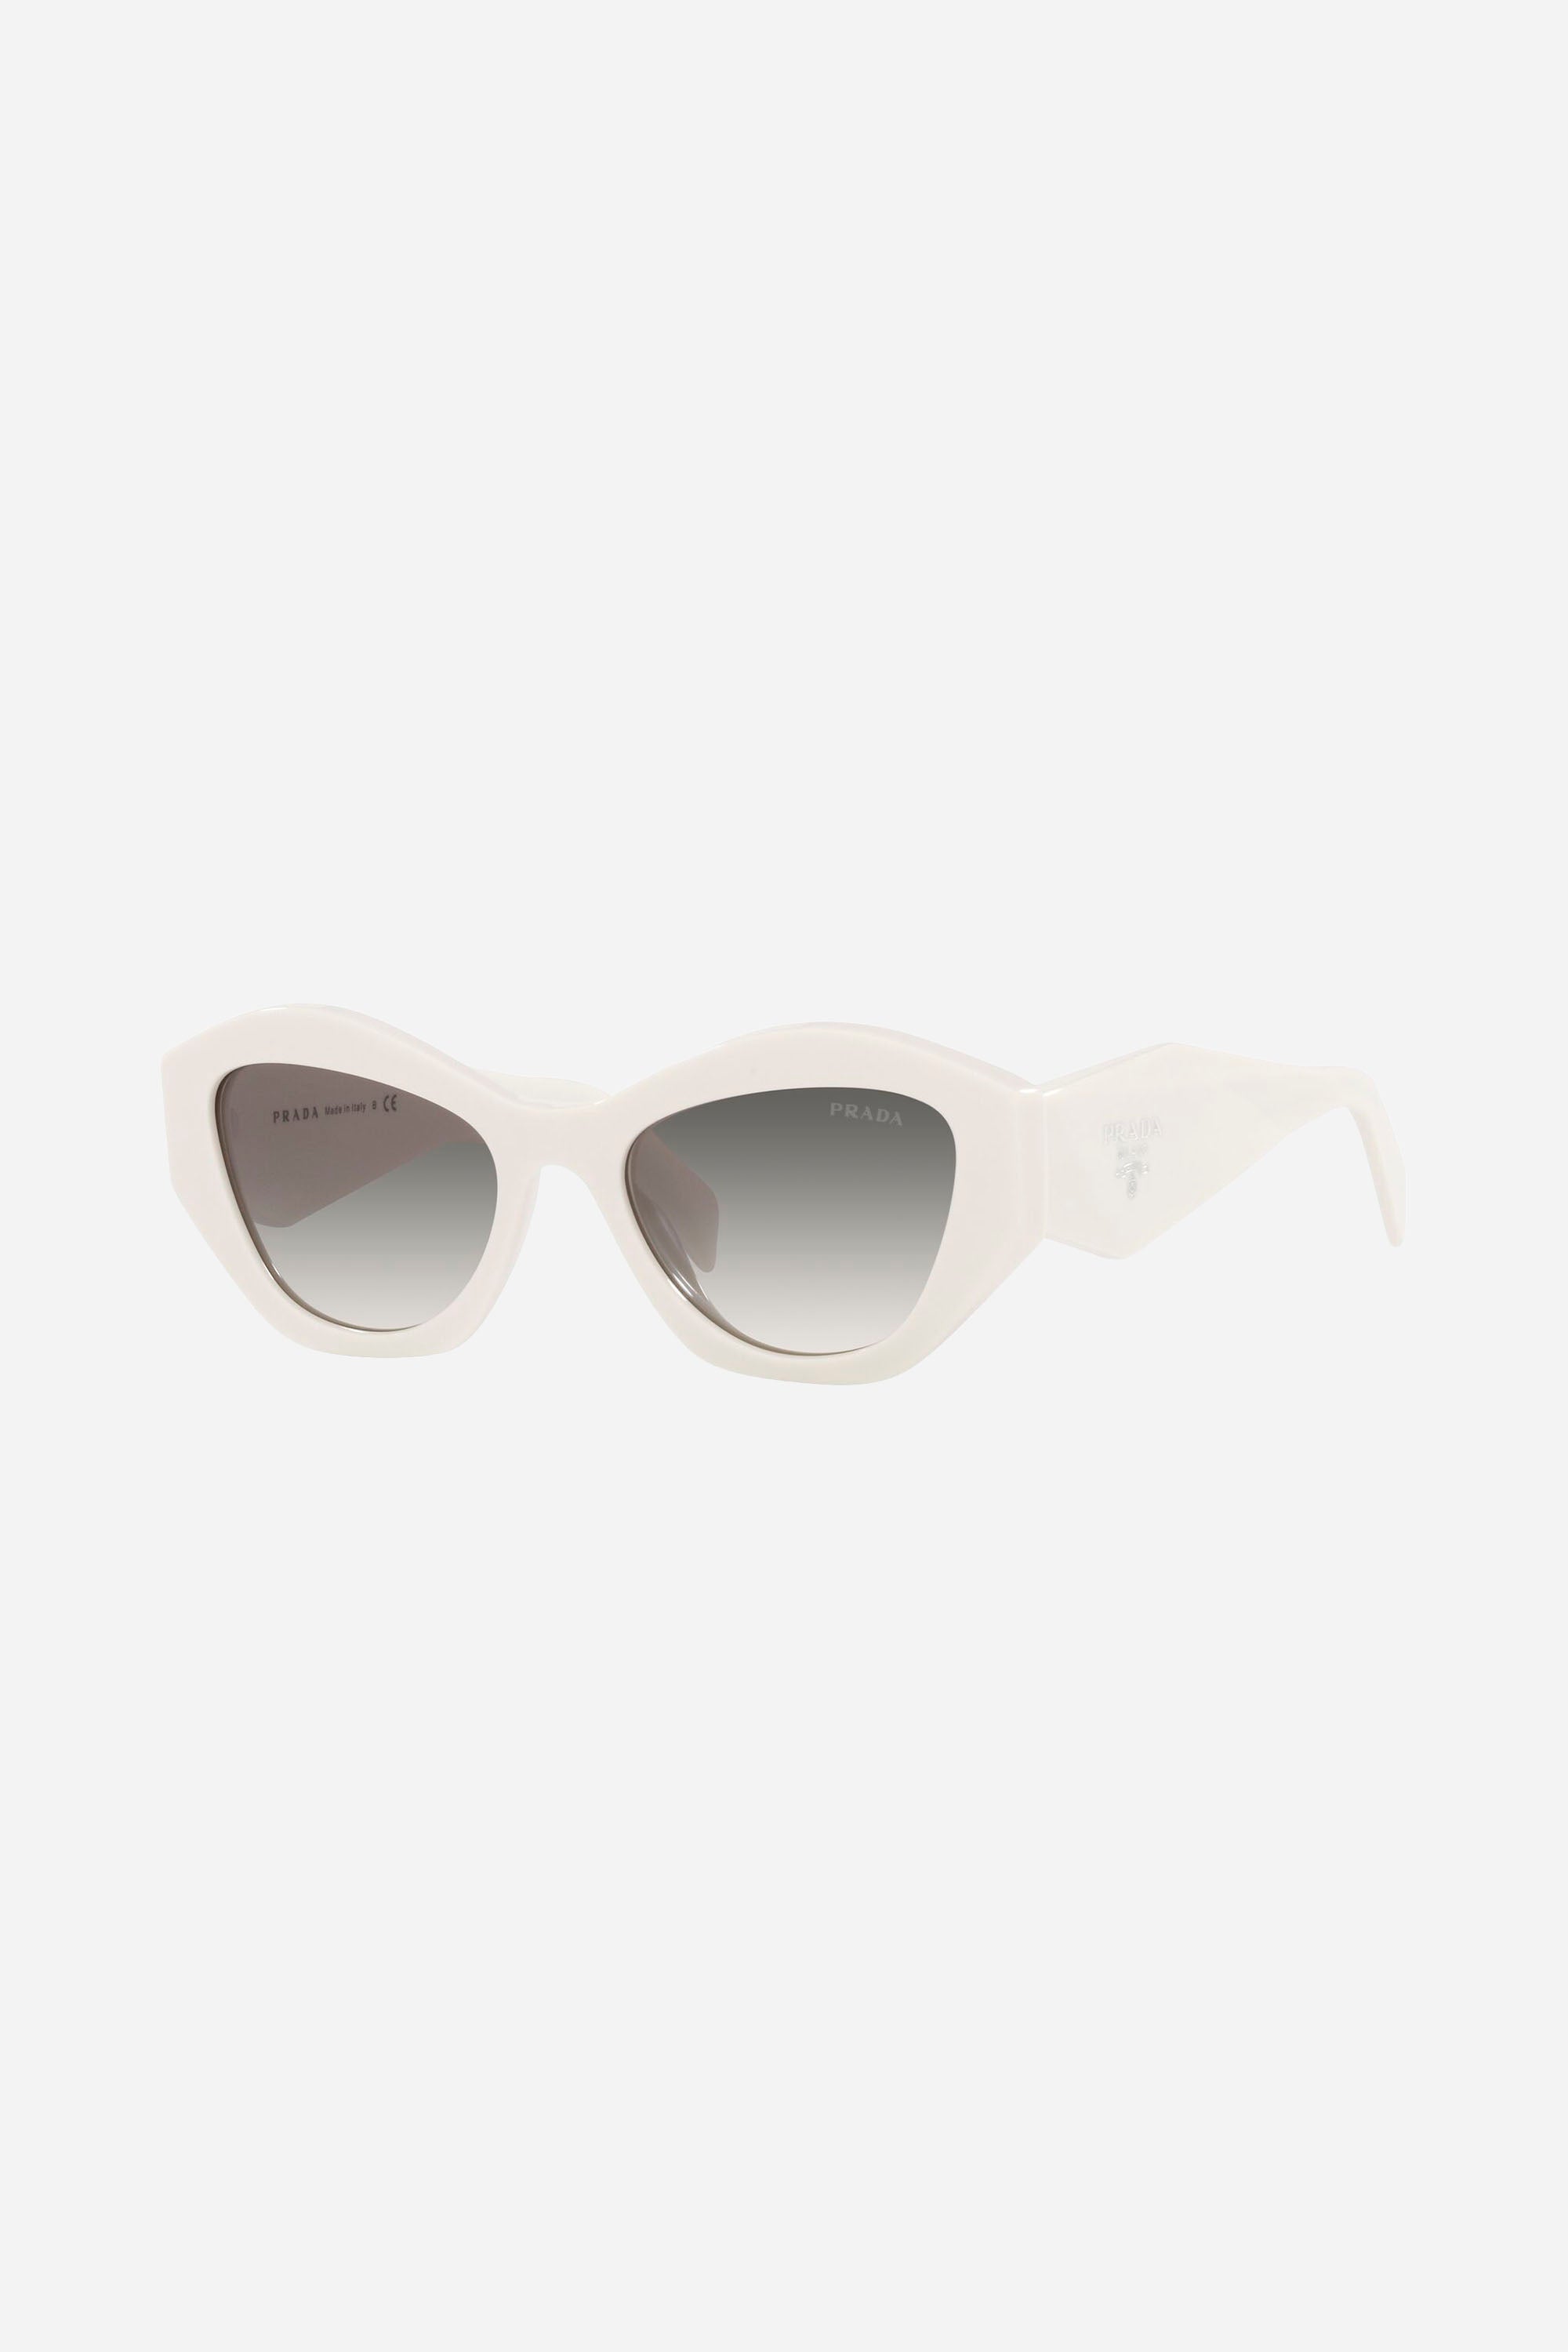 Prada oval white sunglasses featuring iconic logo - Eyewear Club